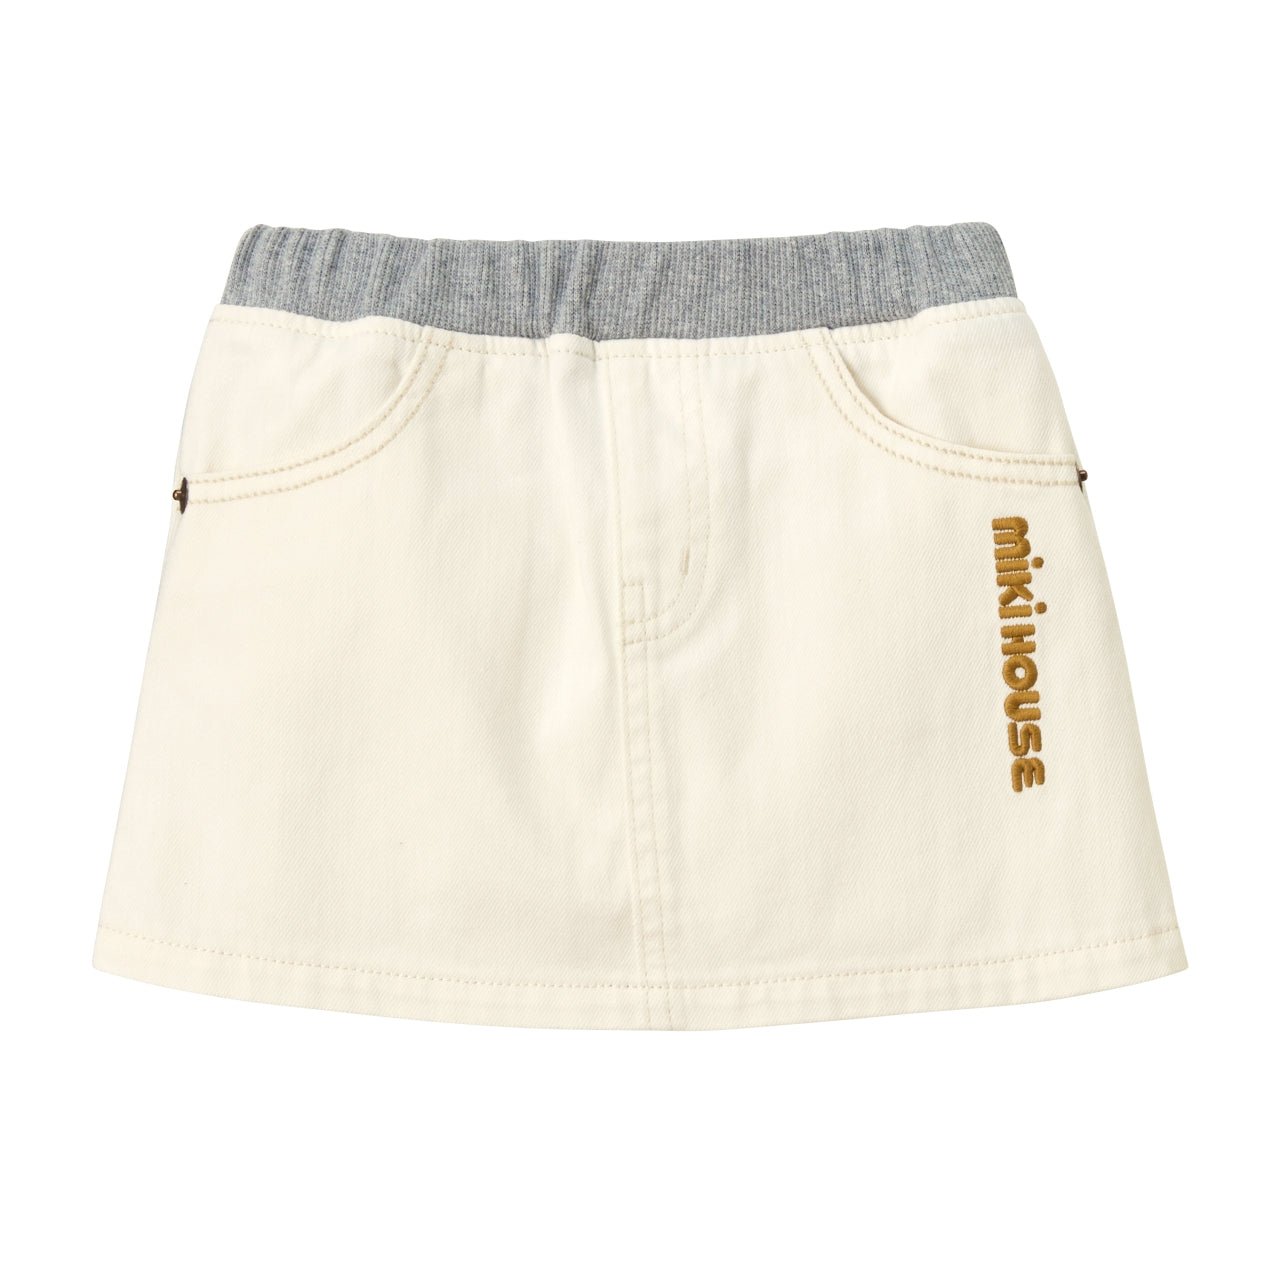 Filter-Bottoms Skirt